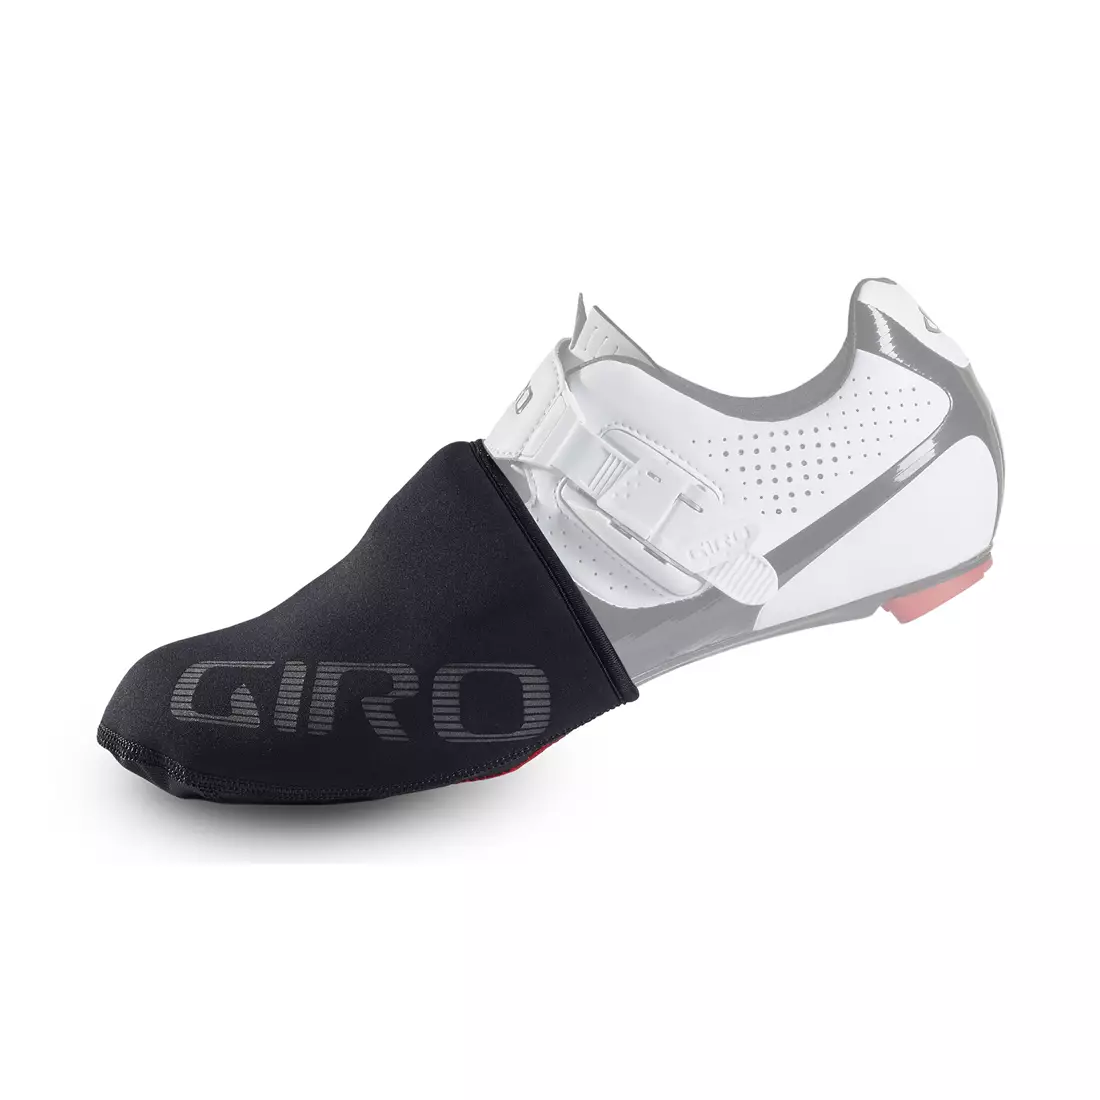 GIRO pokrowce na buty rowerowe ambient toe cvr black GR-7111991